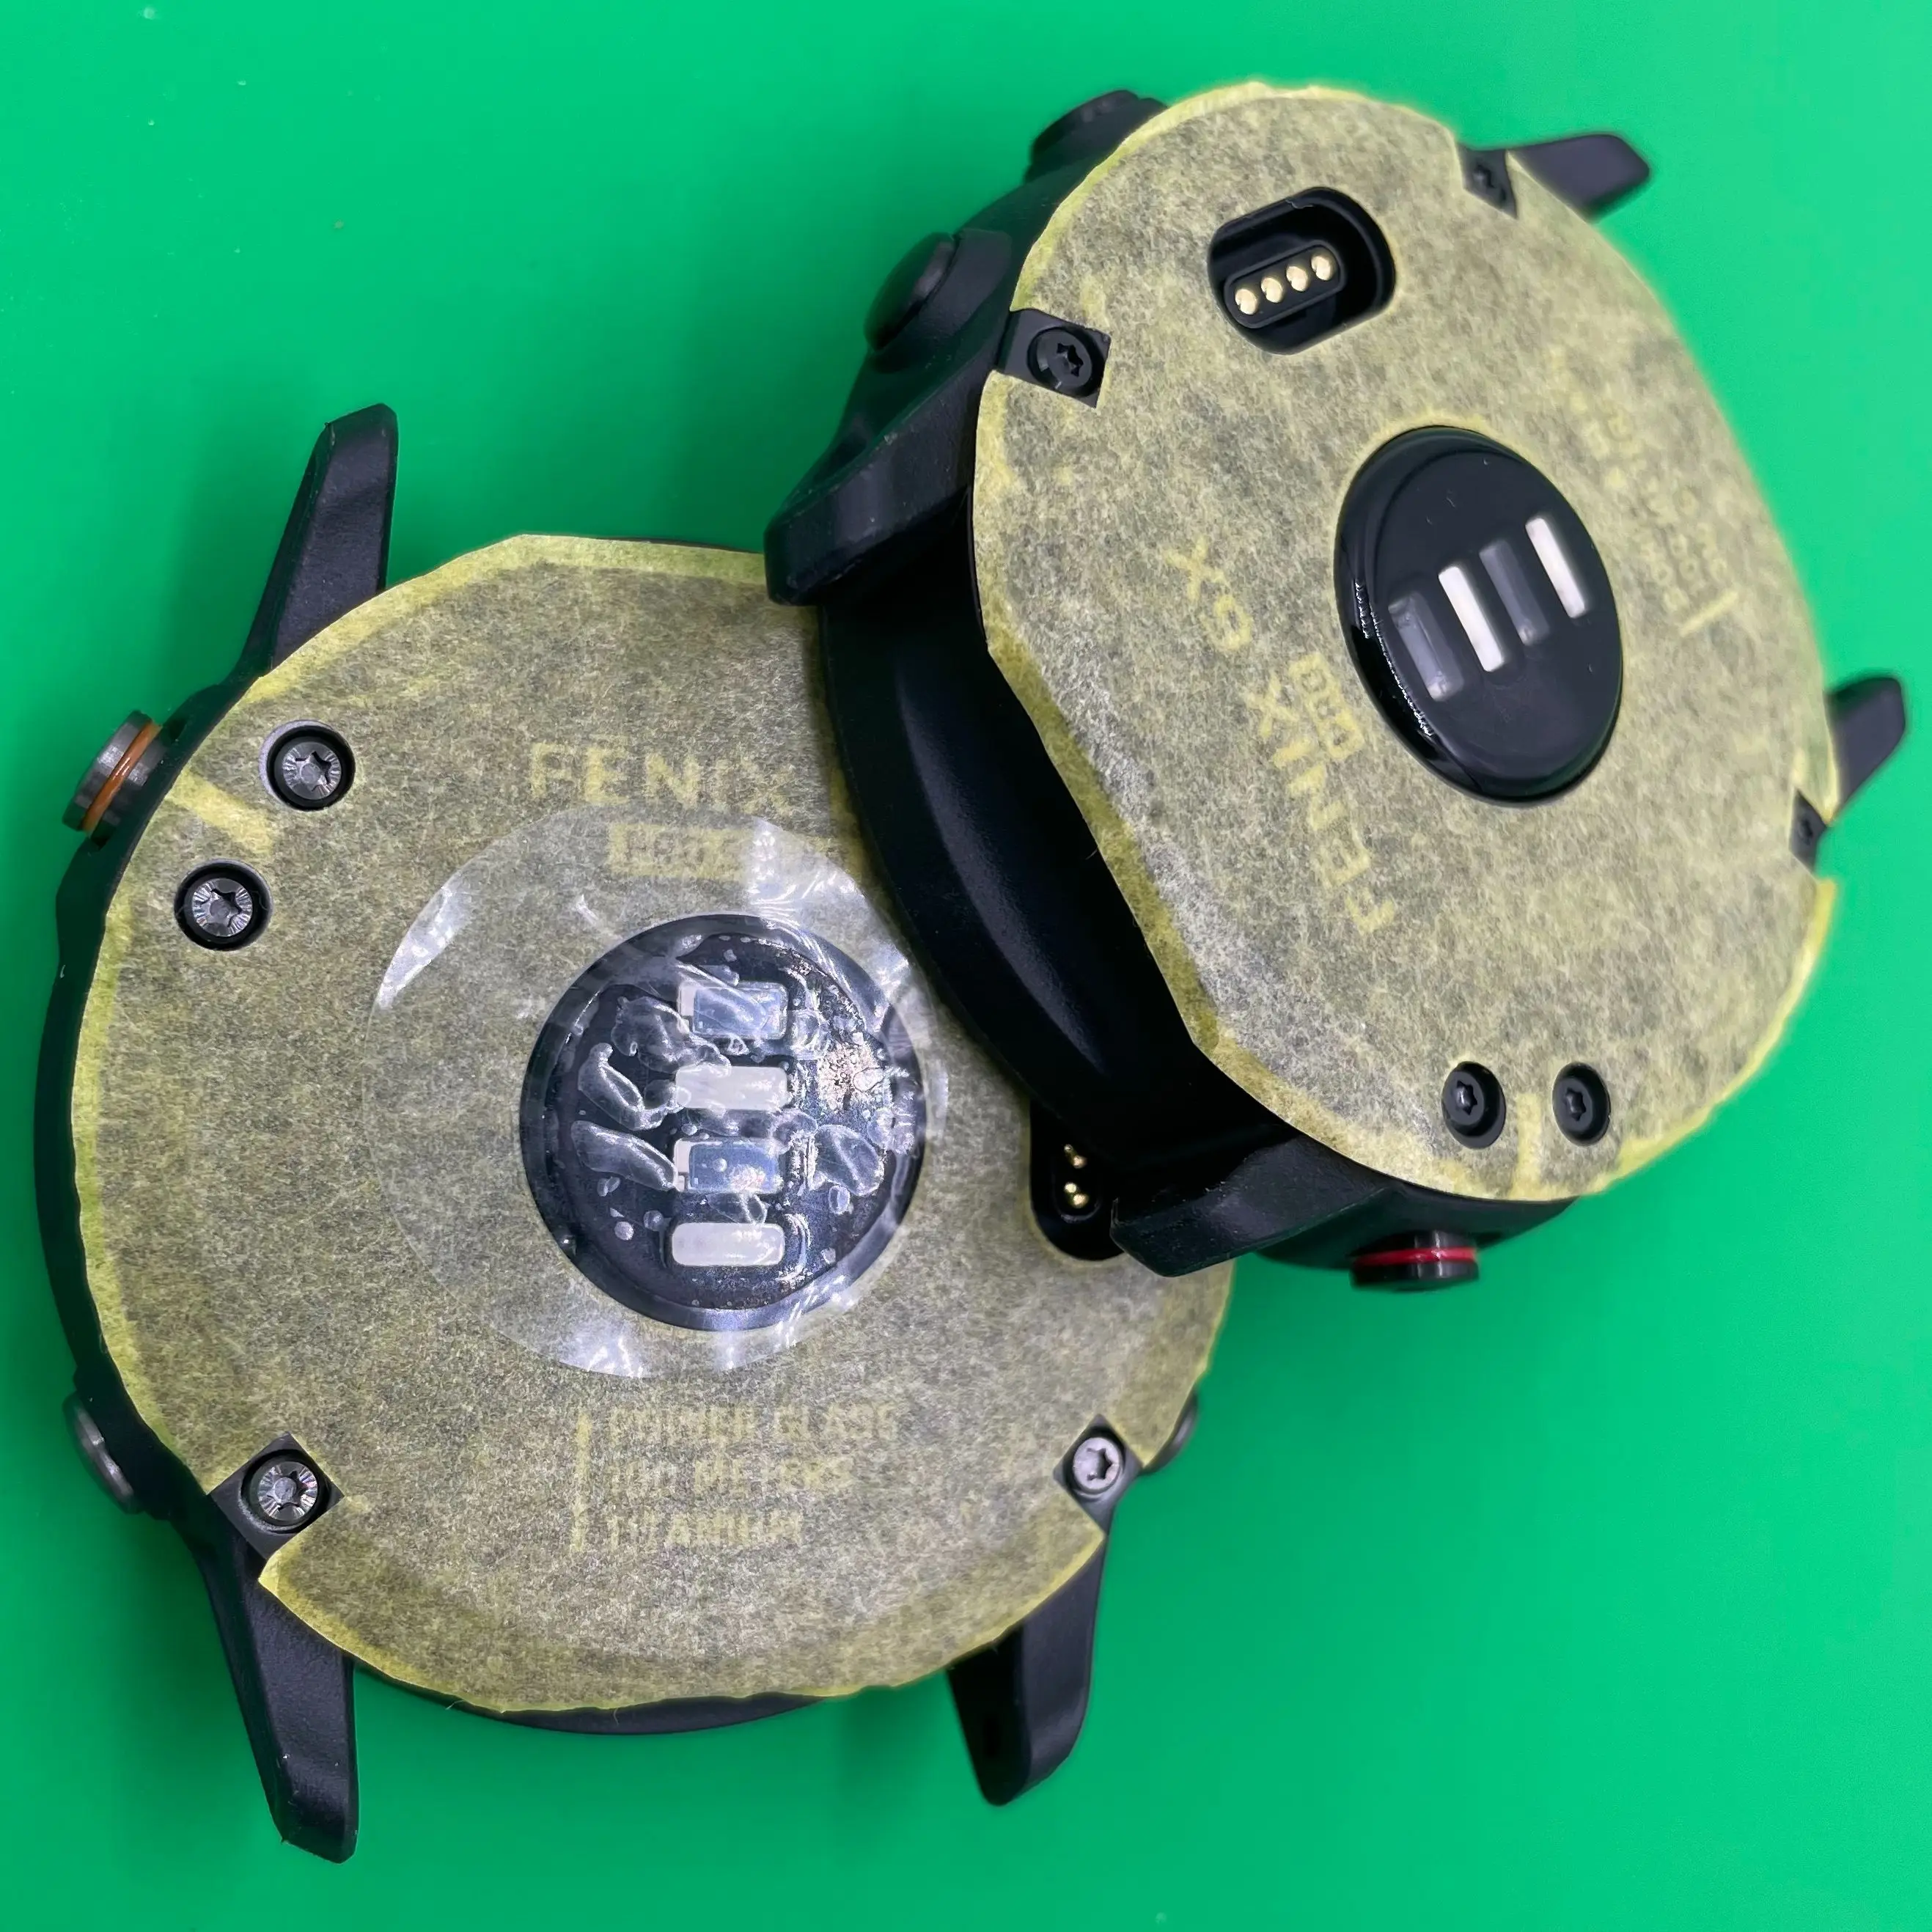 original-back-cover-charging-base-for-garmin-fenix-6x-profenix-6x-pro-solar-multisport-gps-watche-back-case-repair-replacement